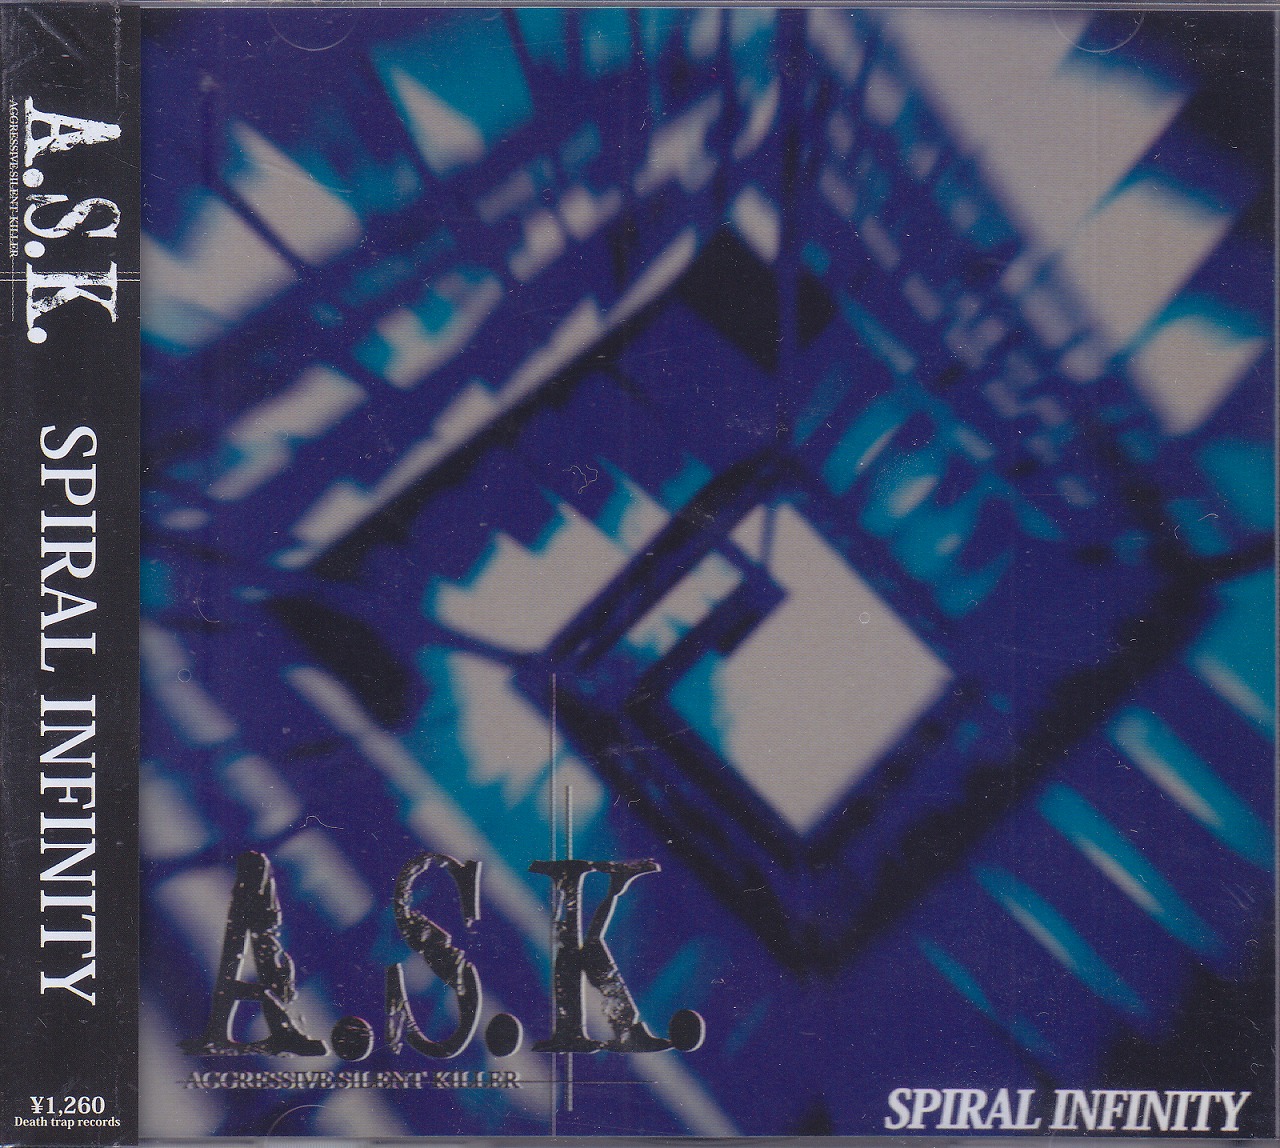 A.S.K ( アスク )  の CD SPIRAL INFINITY